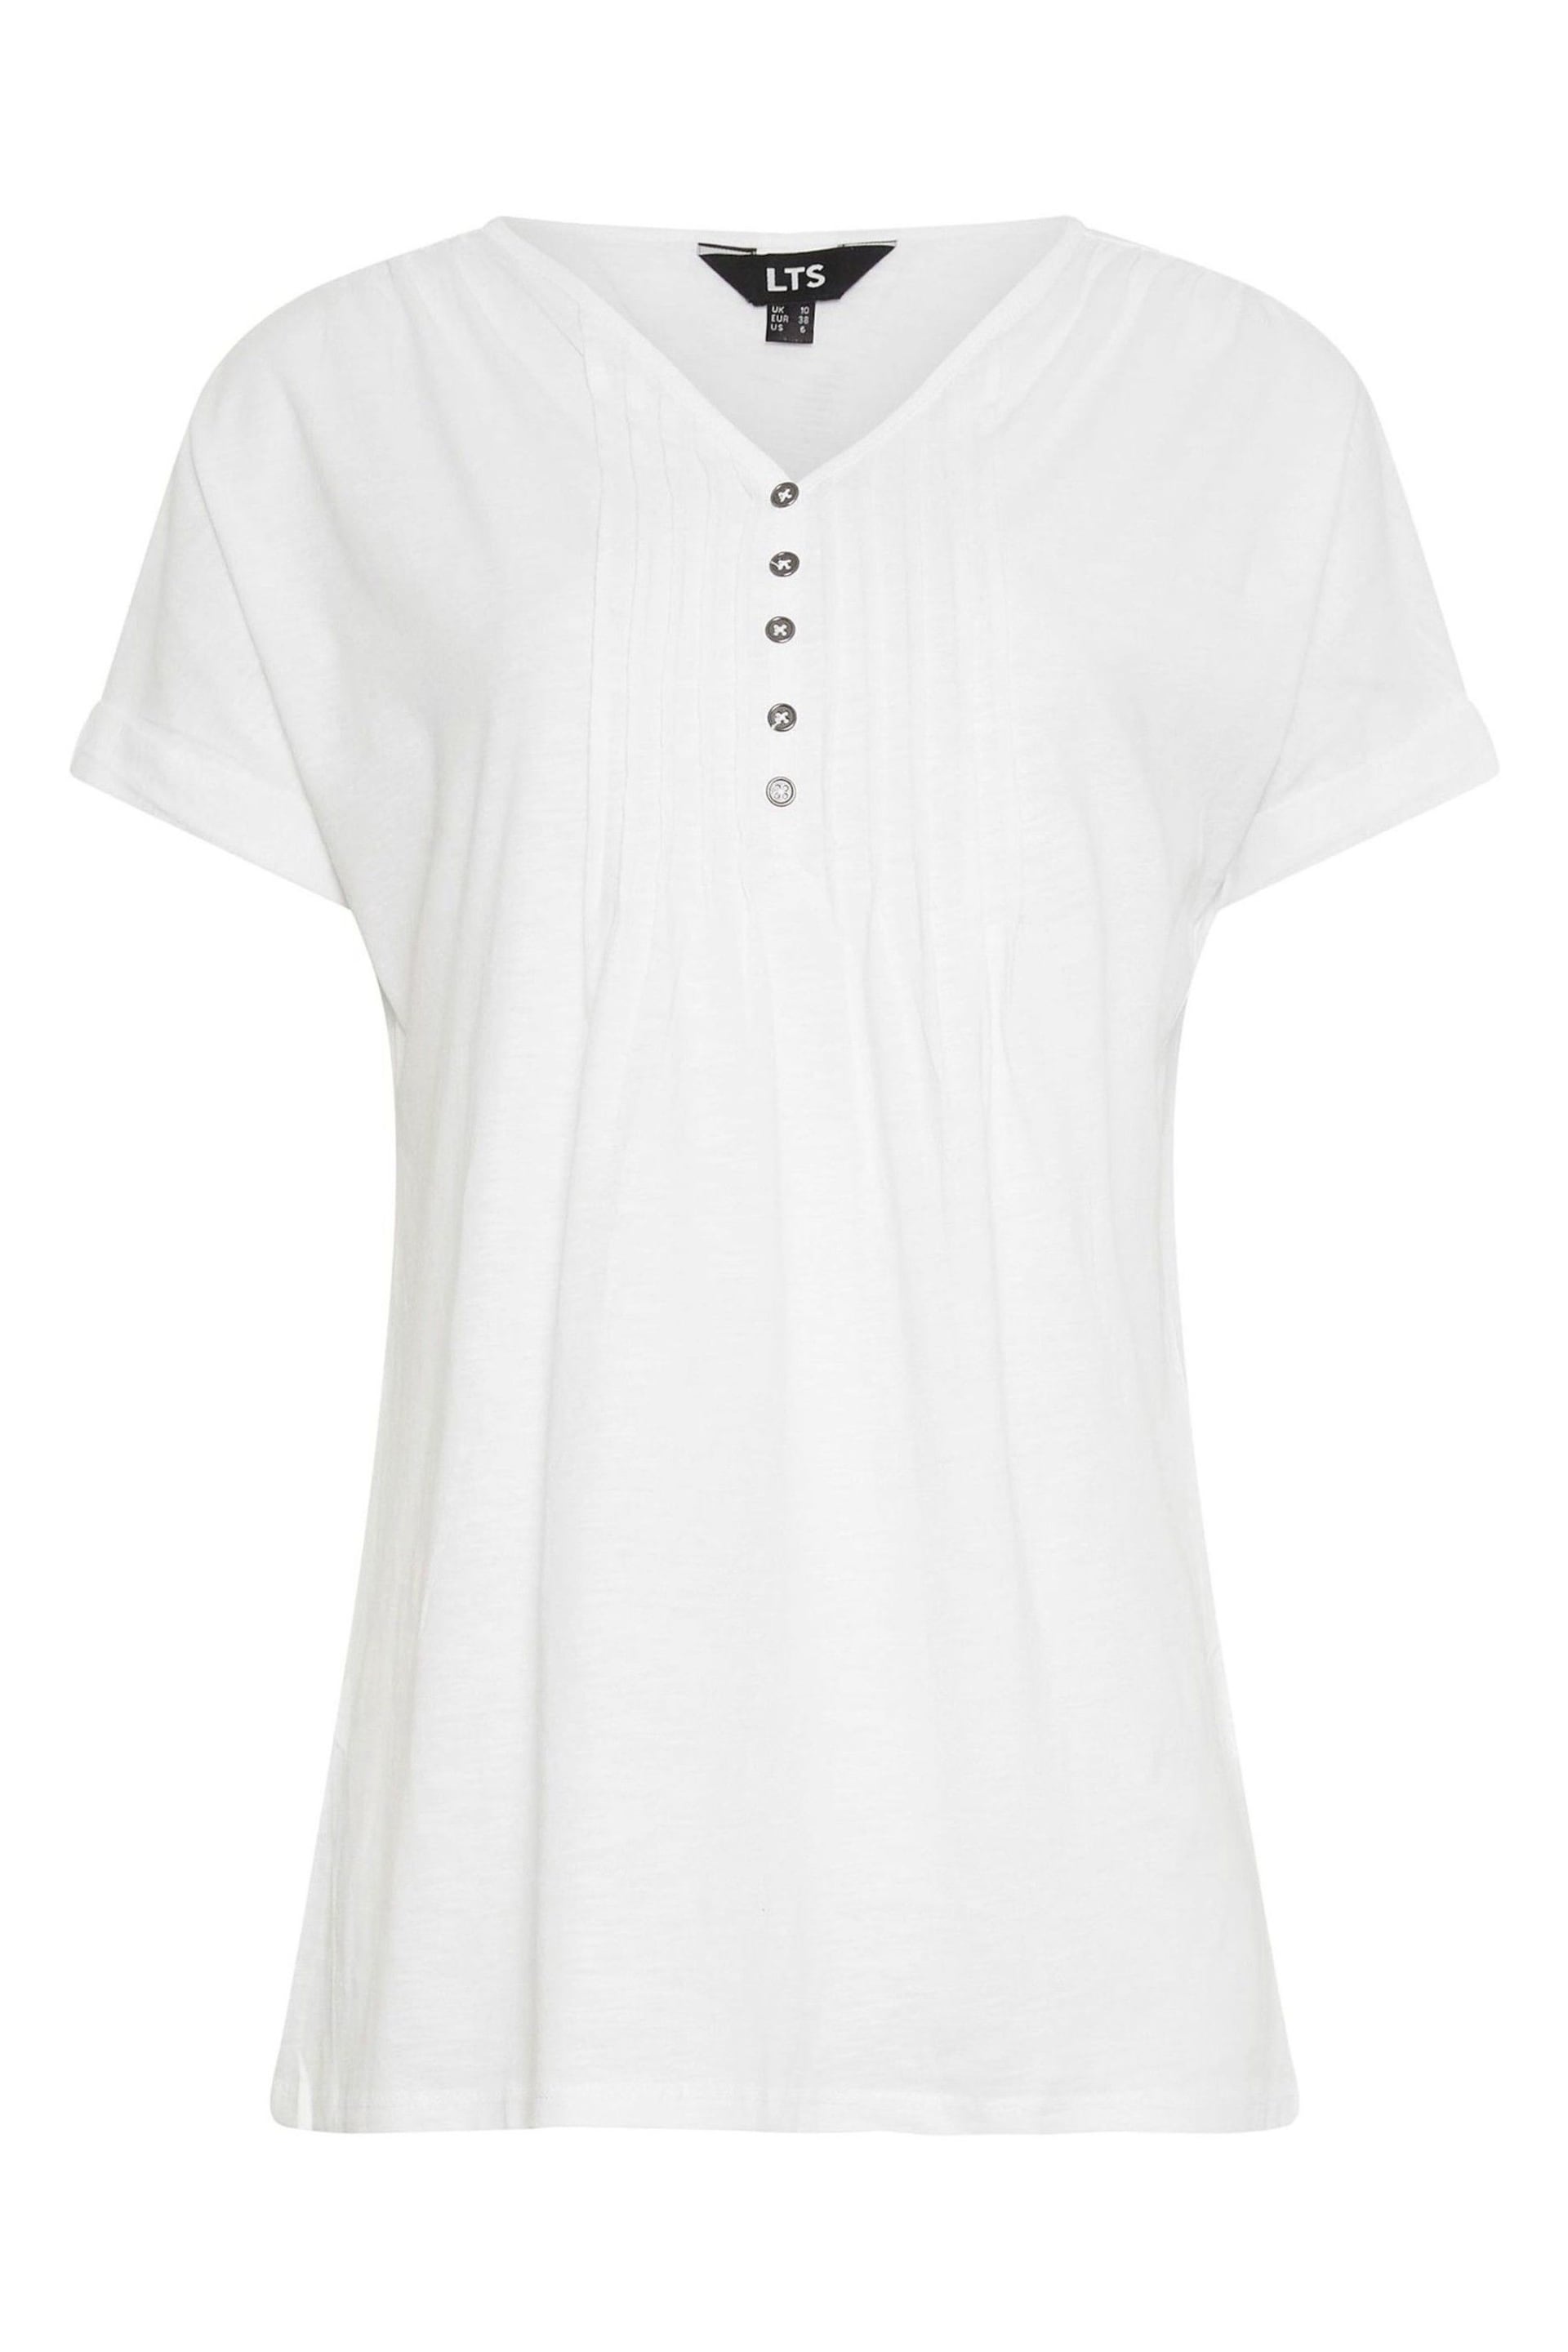 Long Tall Sally Cream LTS Tall Khaki Green Cotton Henley T-Shirt - Image 5 of 5